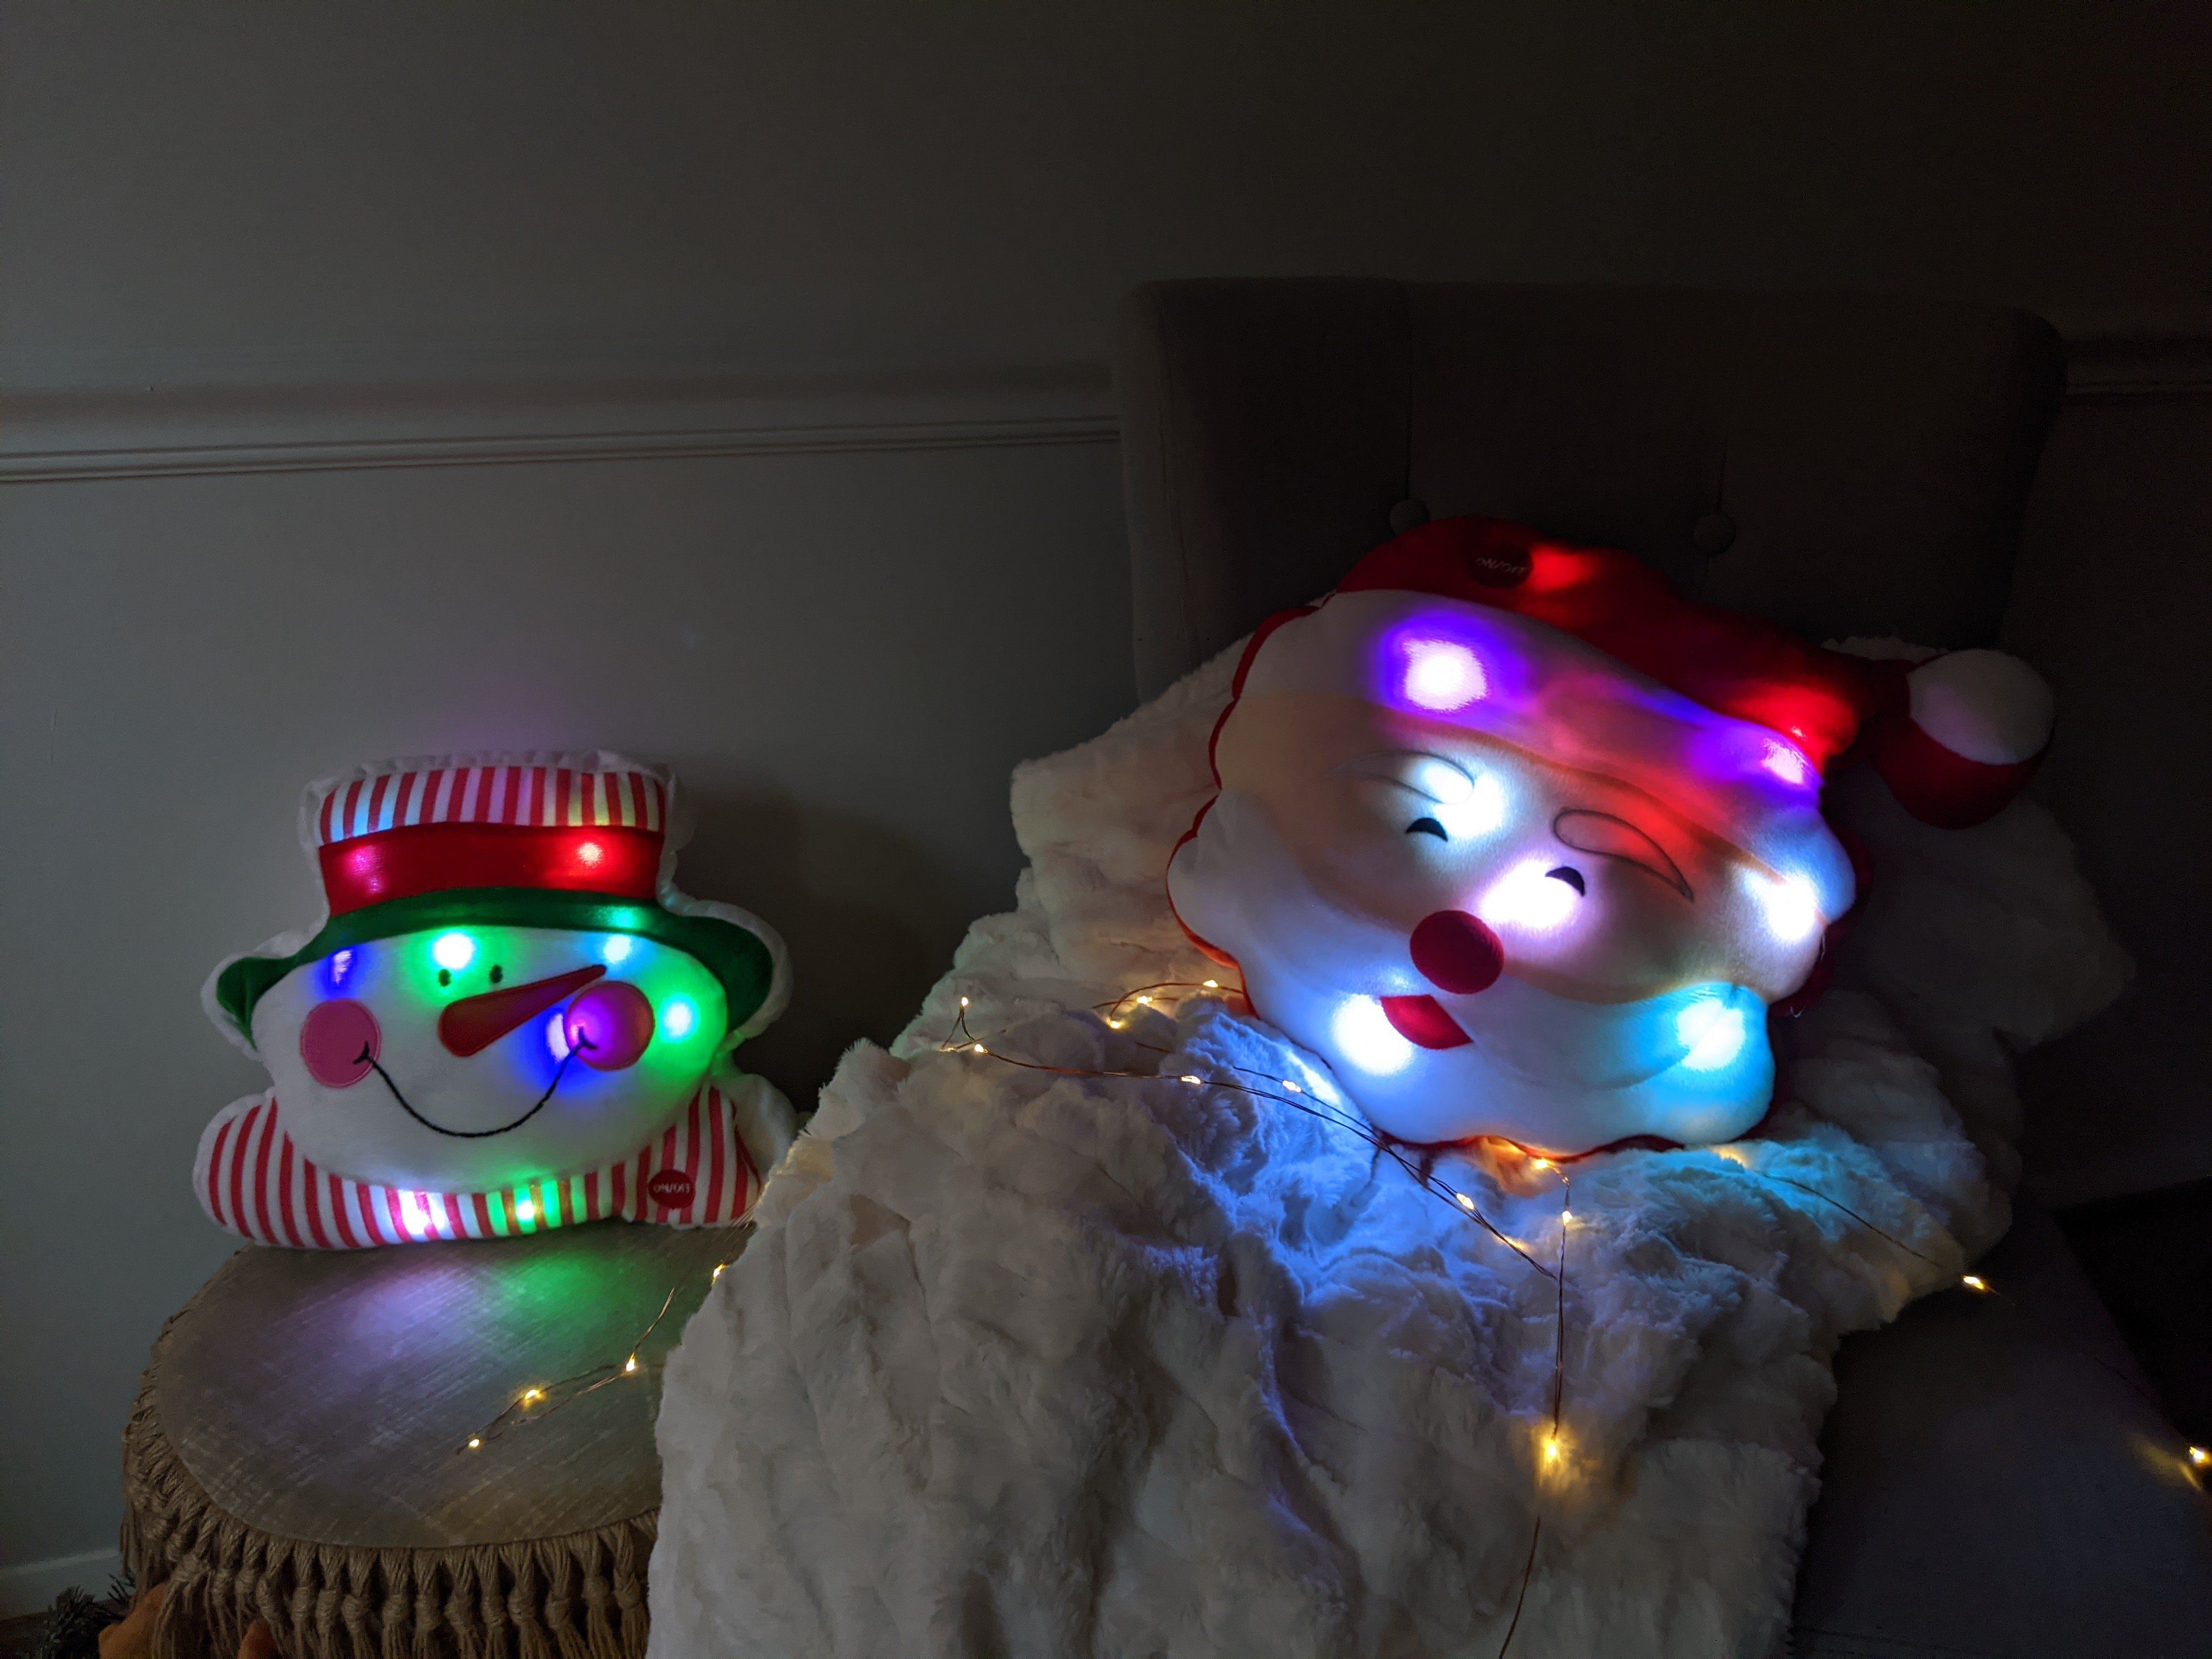 Tache Squishy Light Up Cute Christmas Chilly Snowman Microbead LED Throw Pillow - Tache Home Fashion